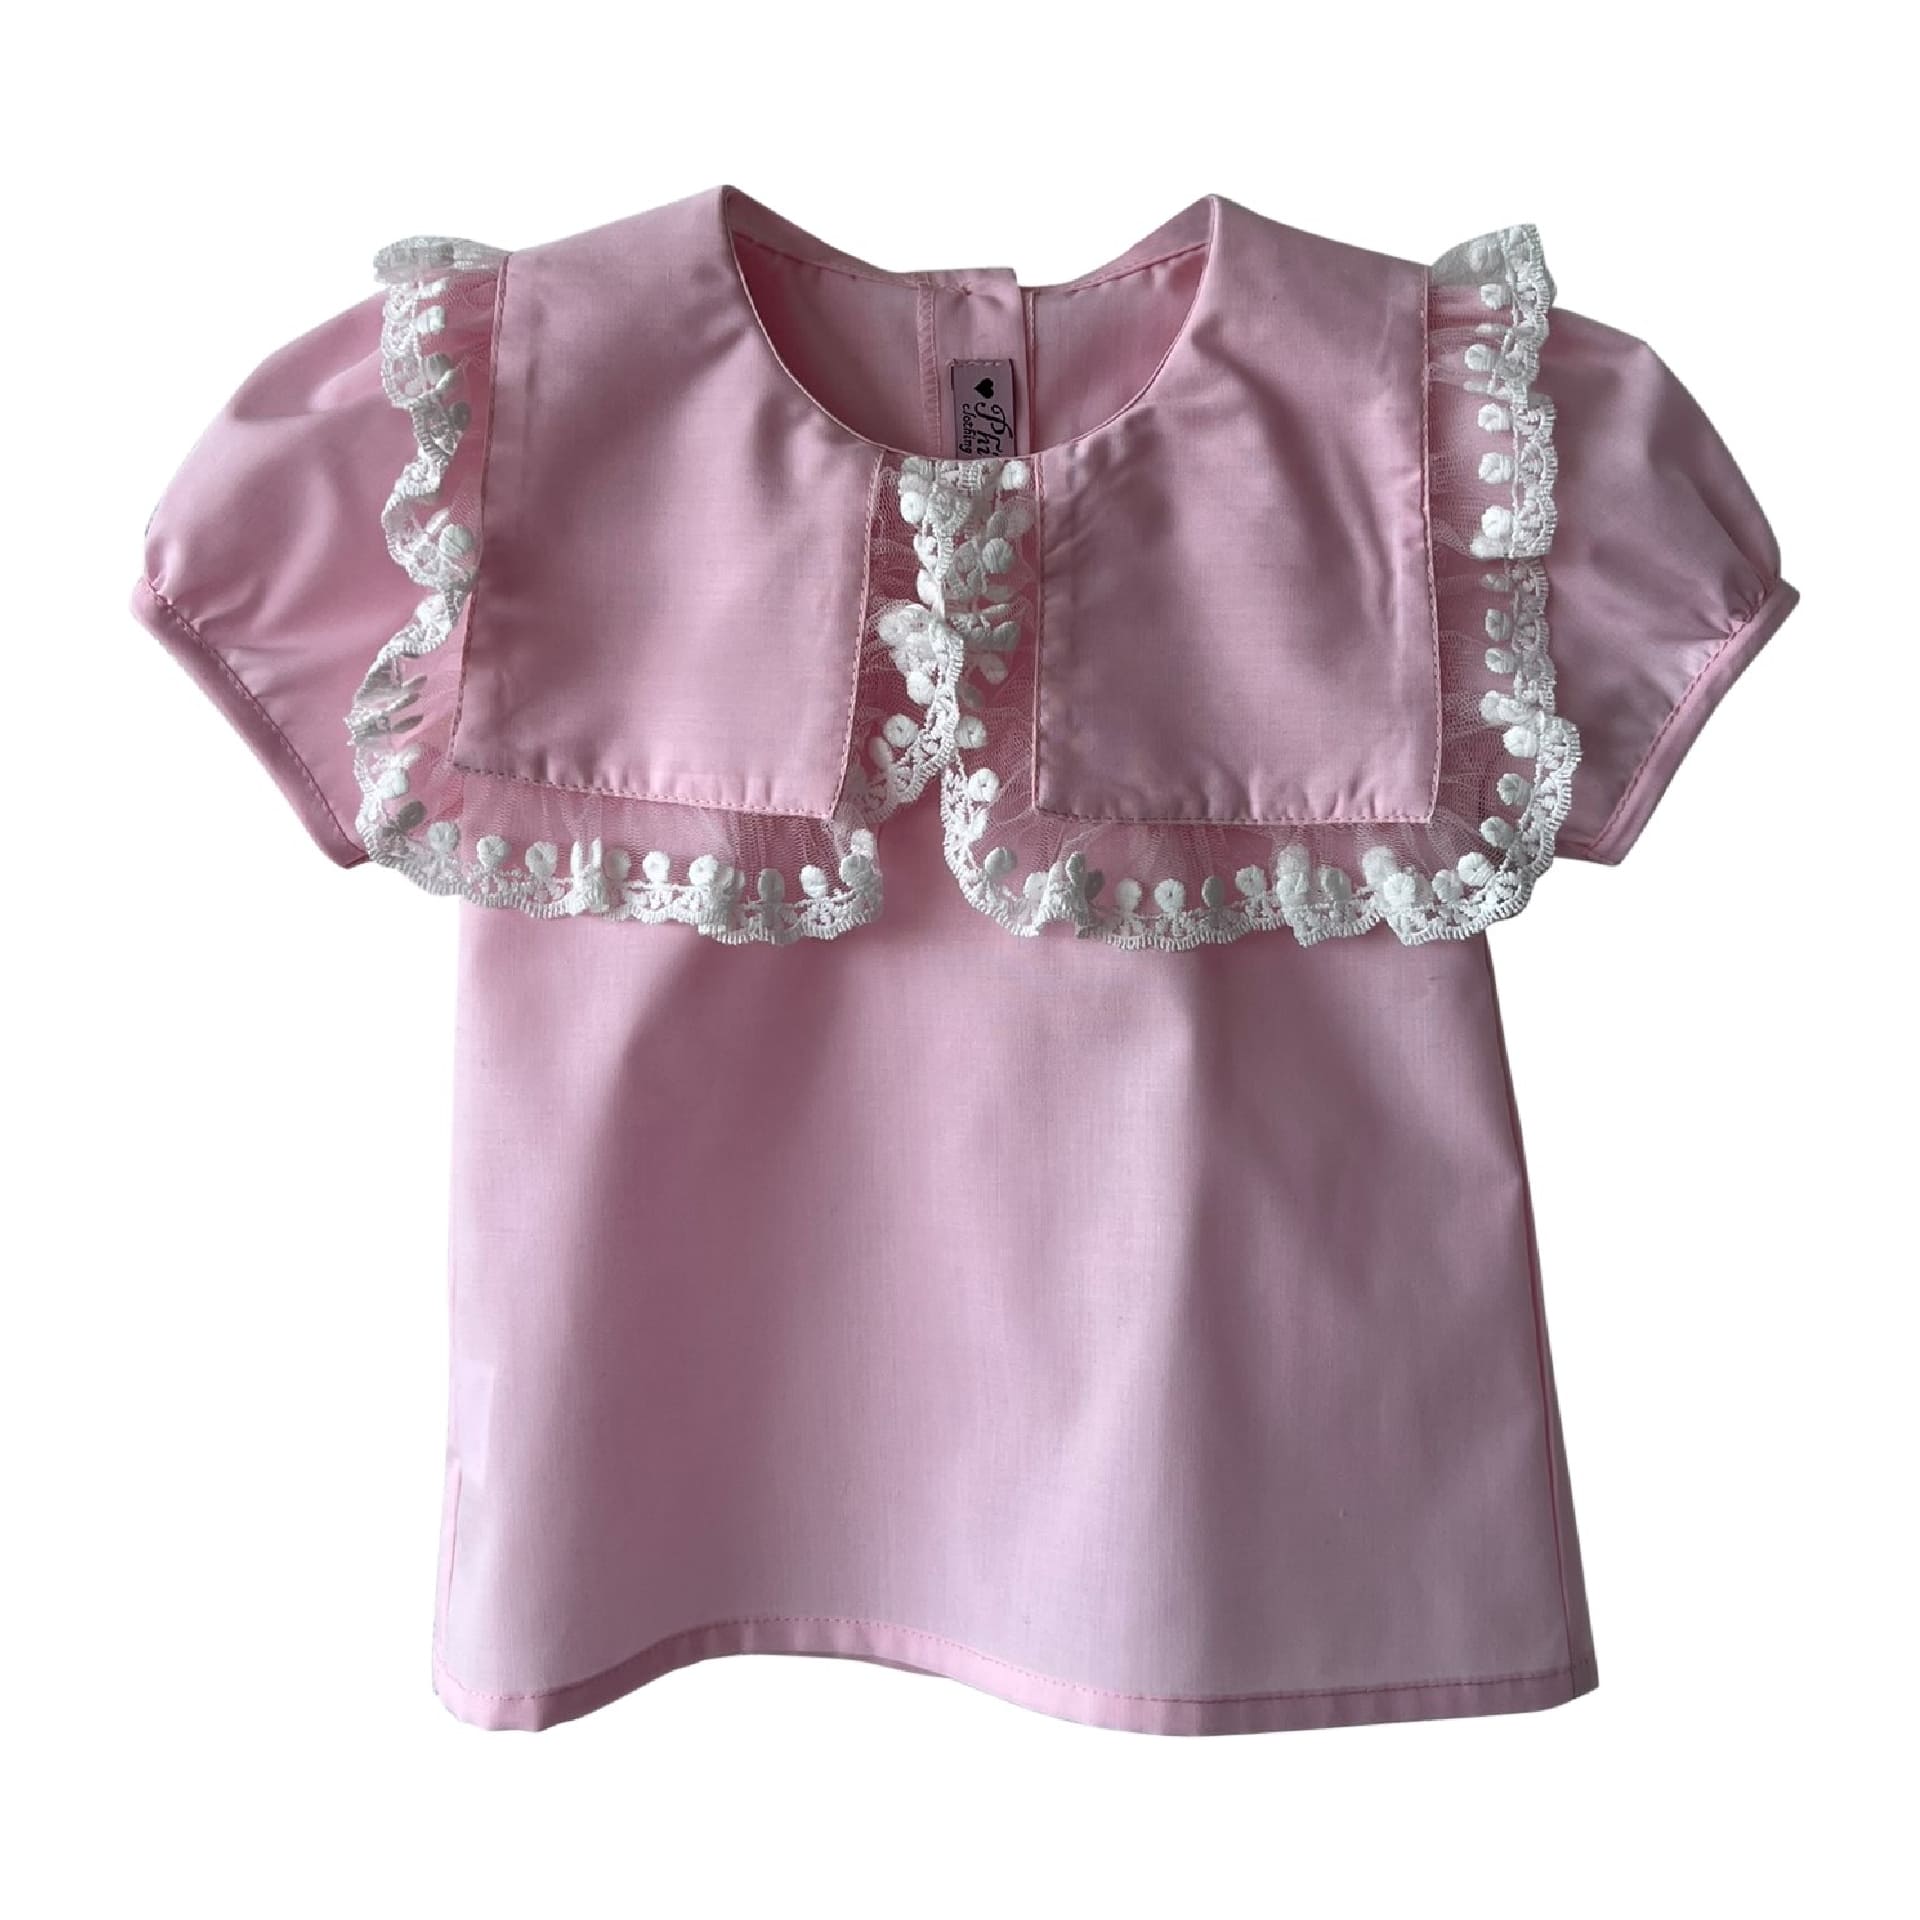 Pink 2 collar blouse